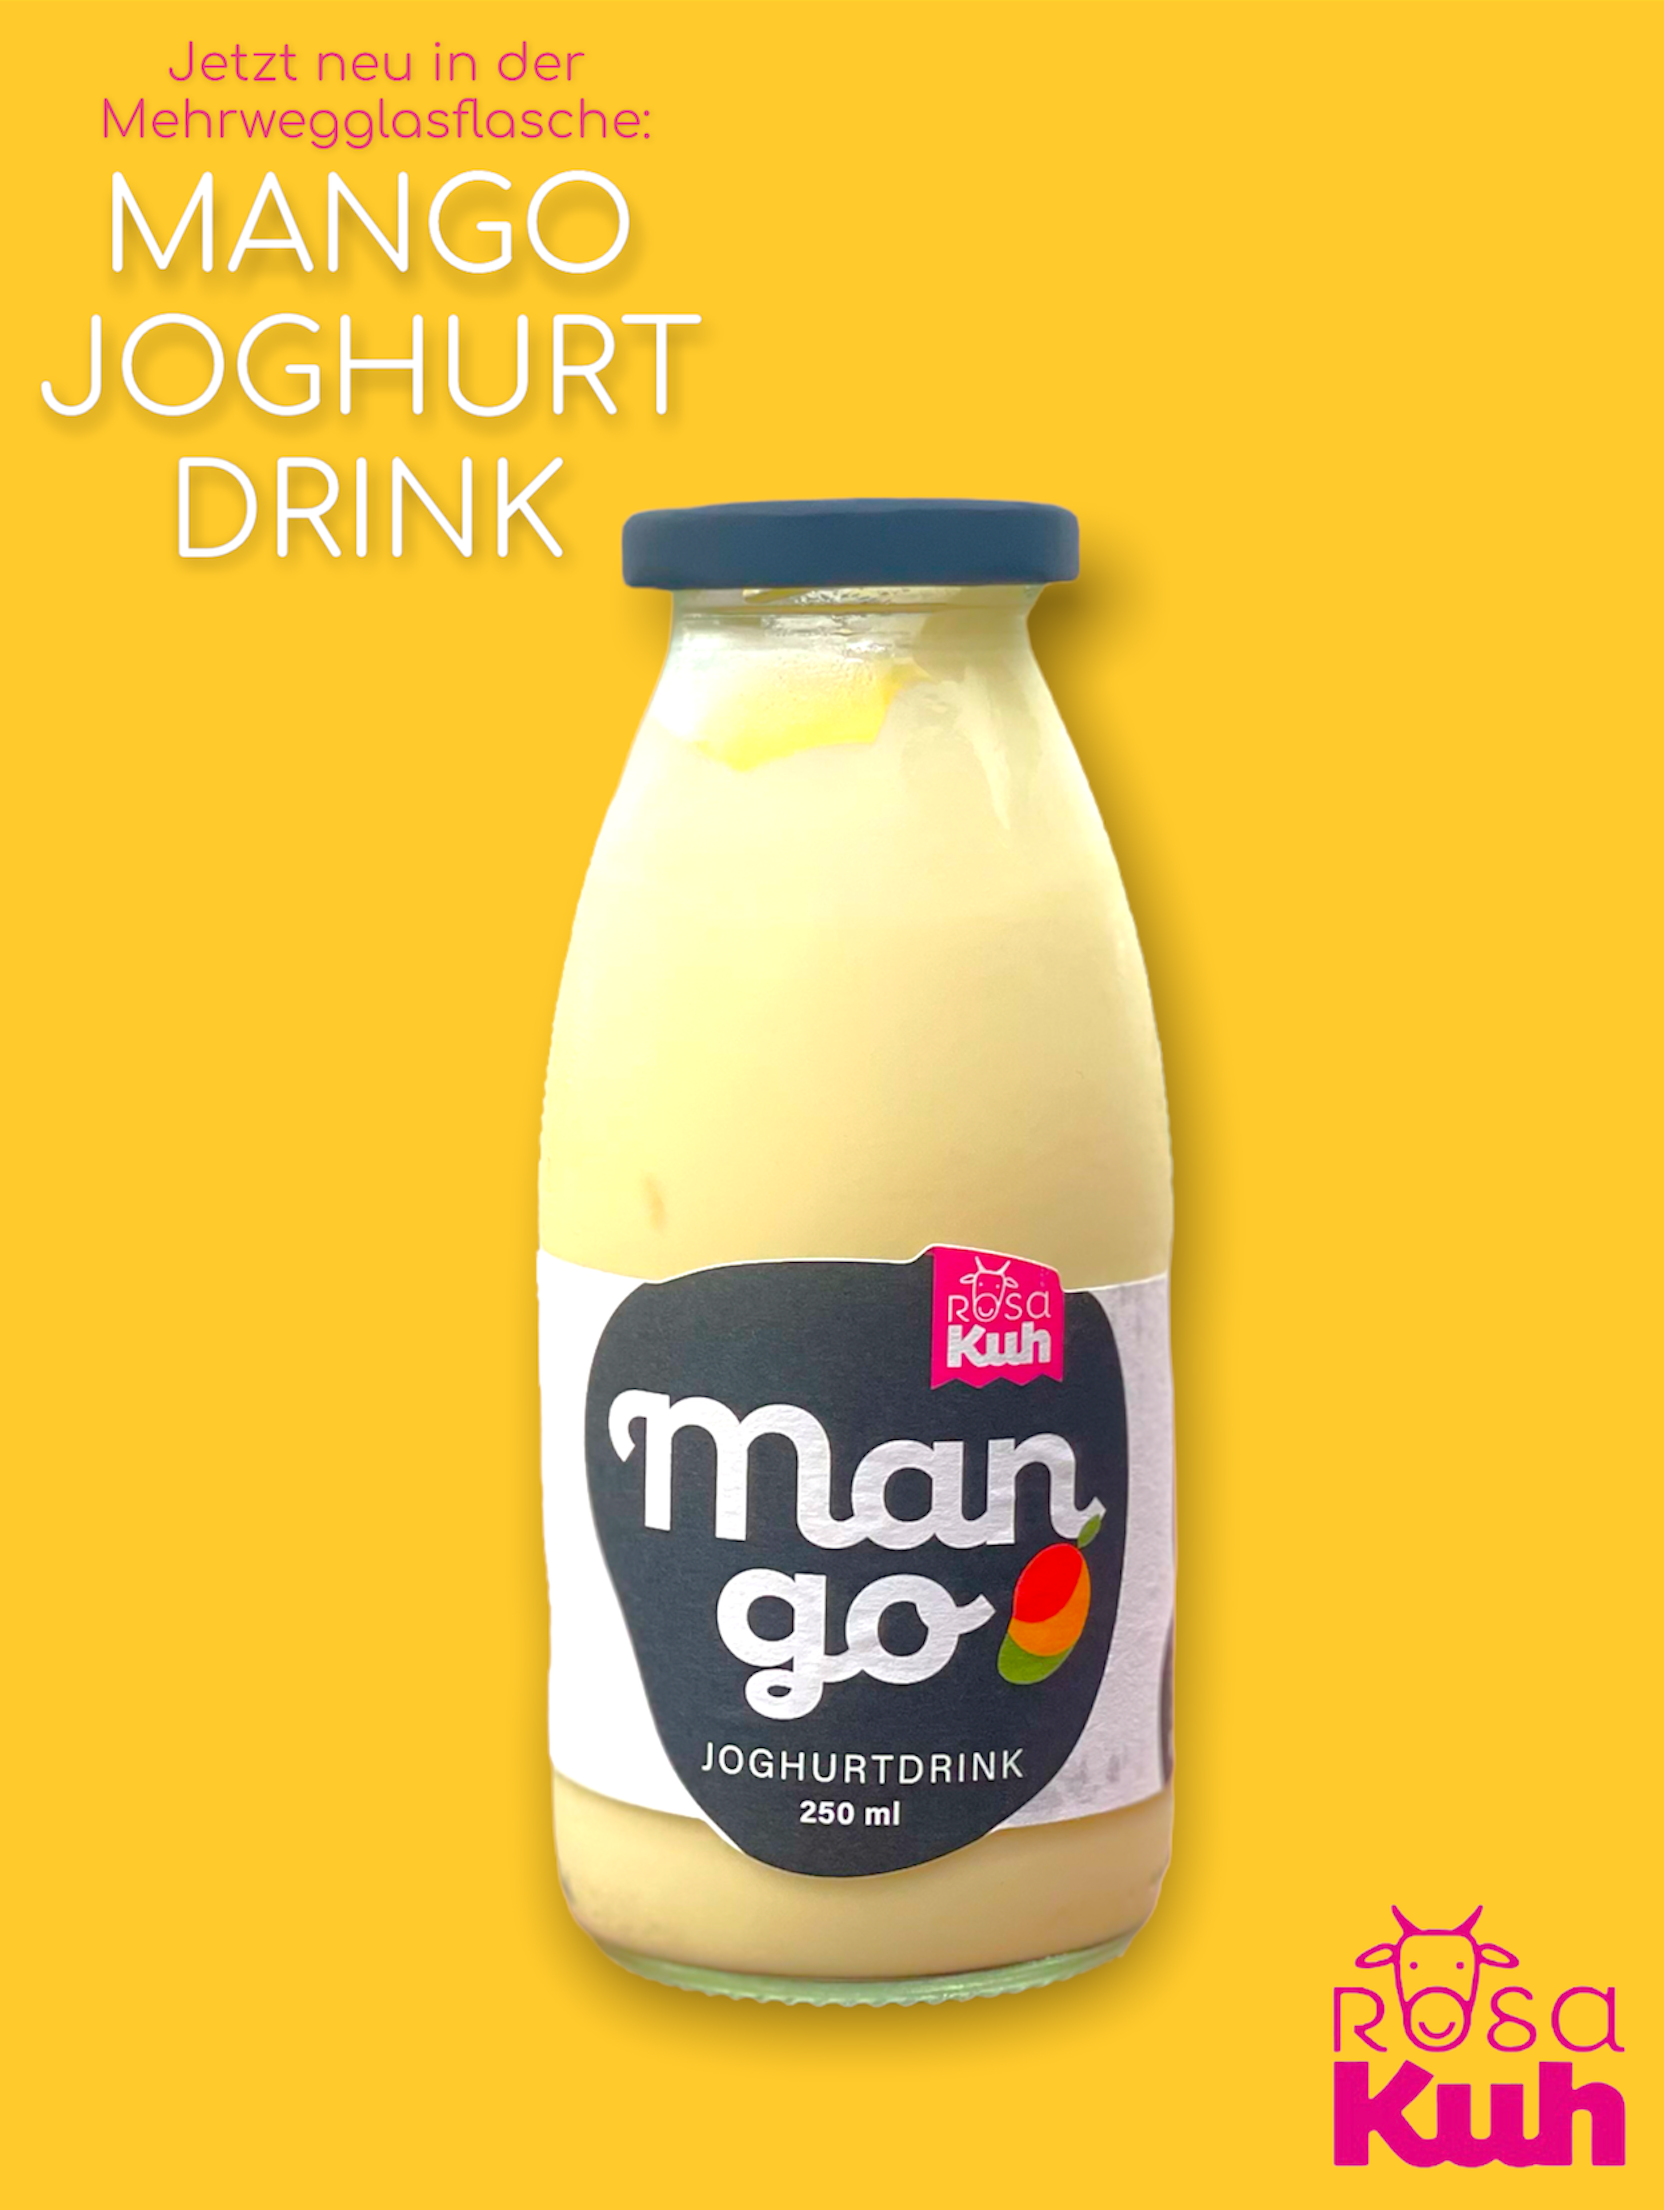 Mangojoghurtdrink 250g (Saisonal)